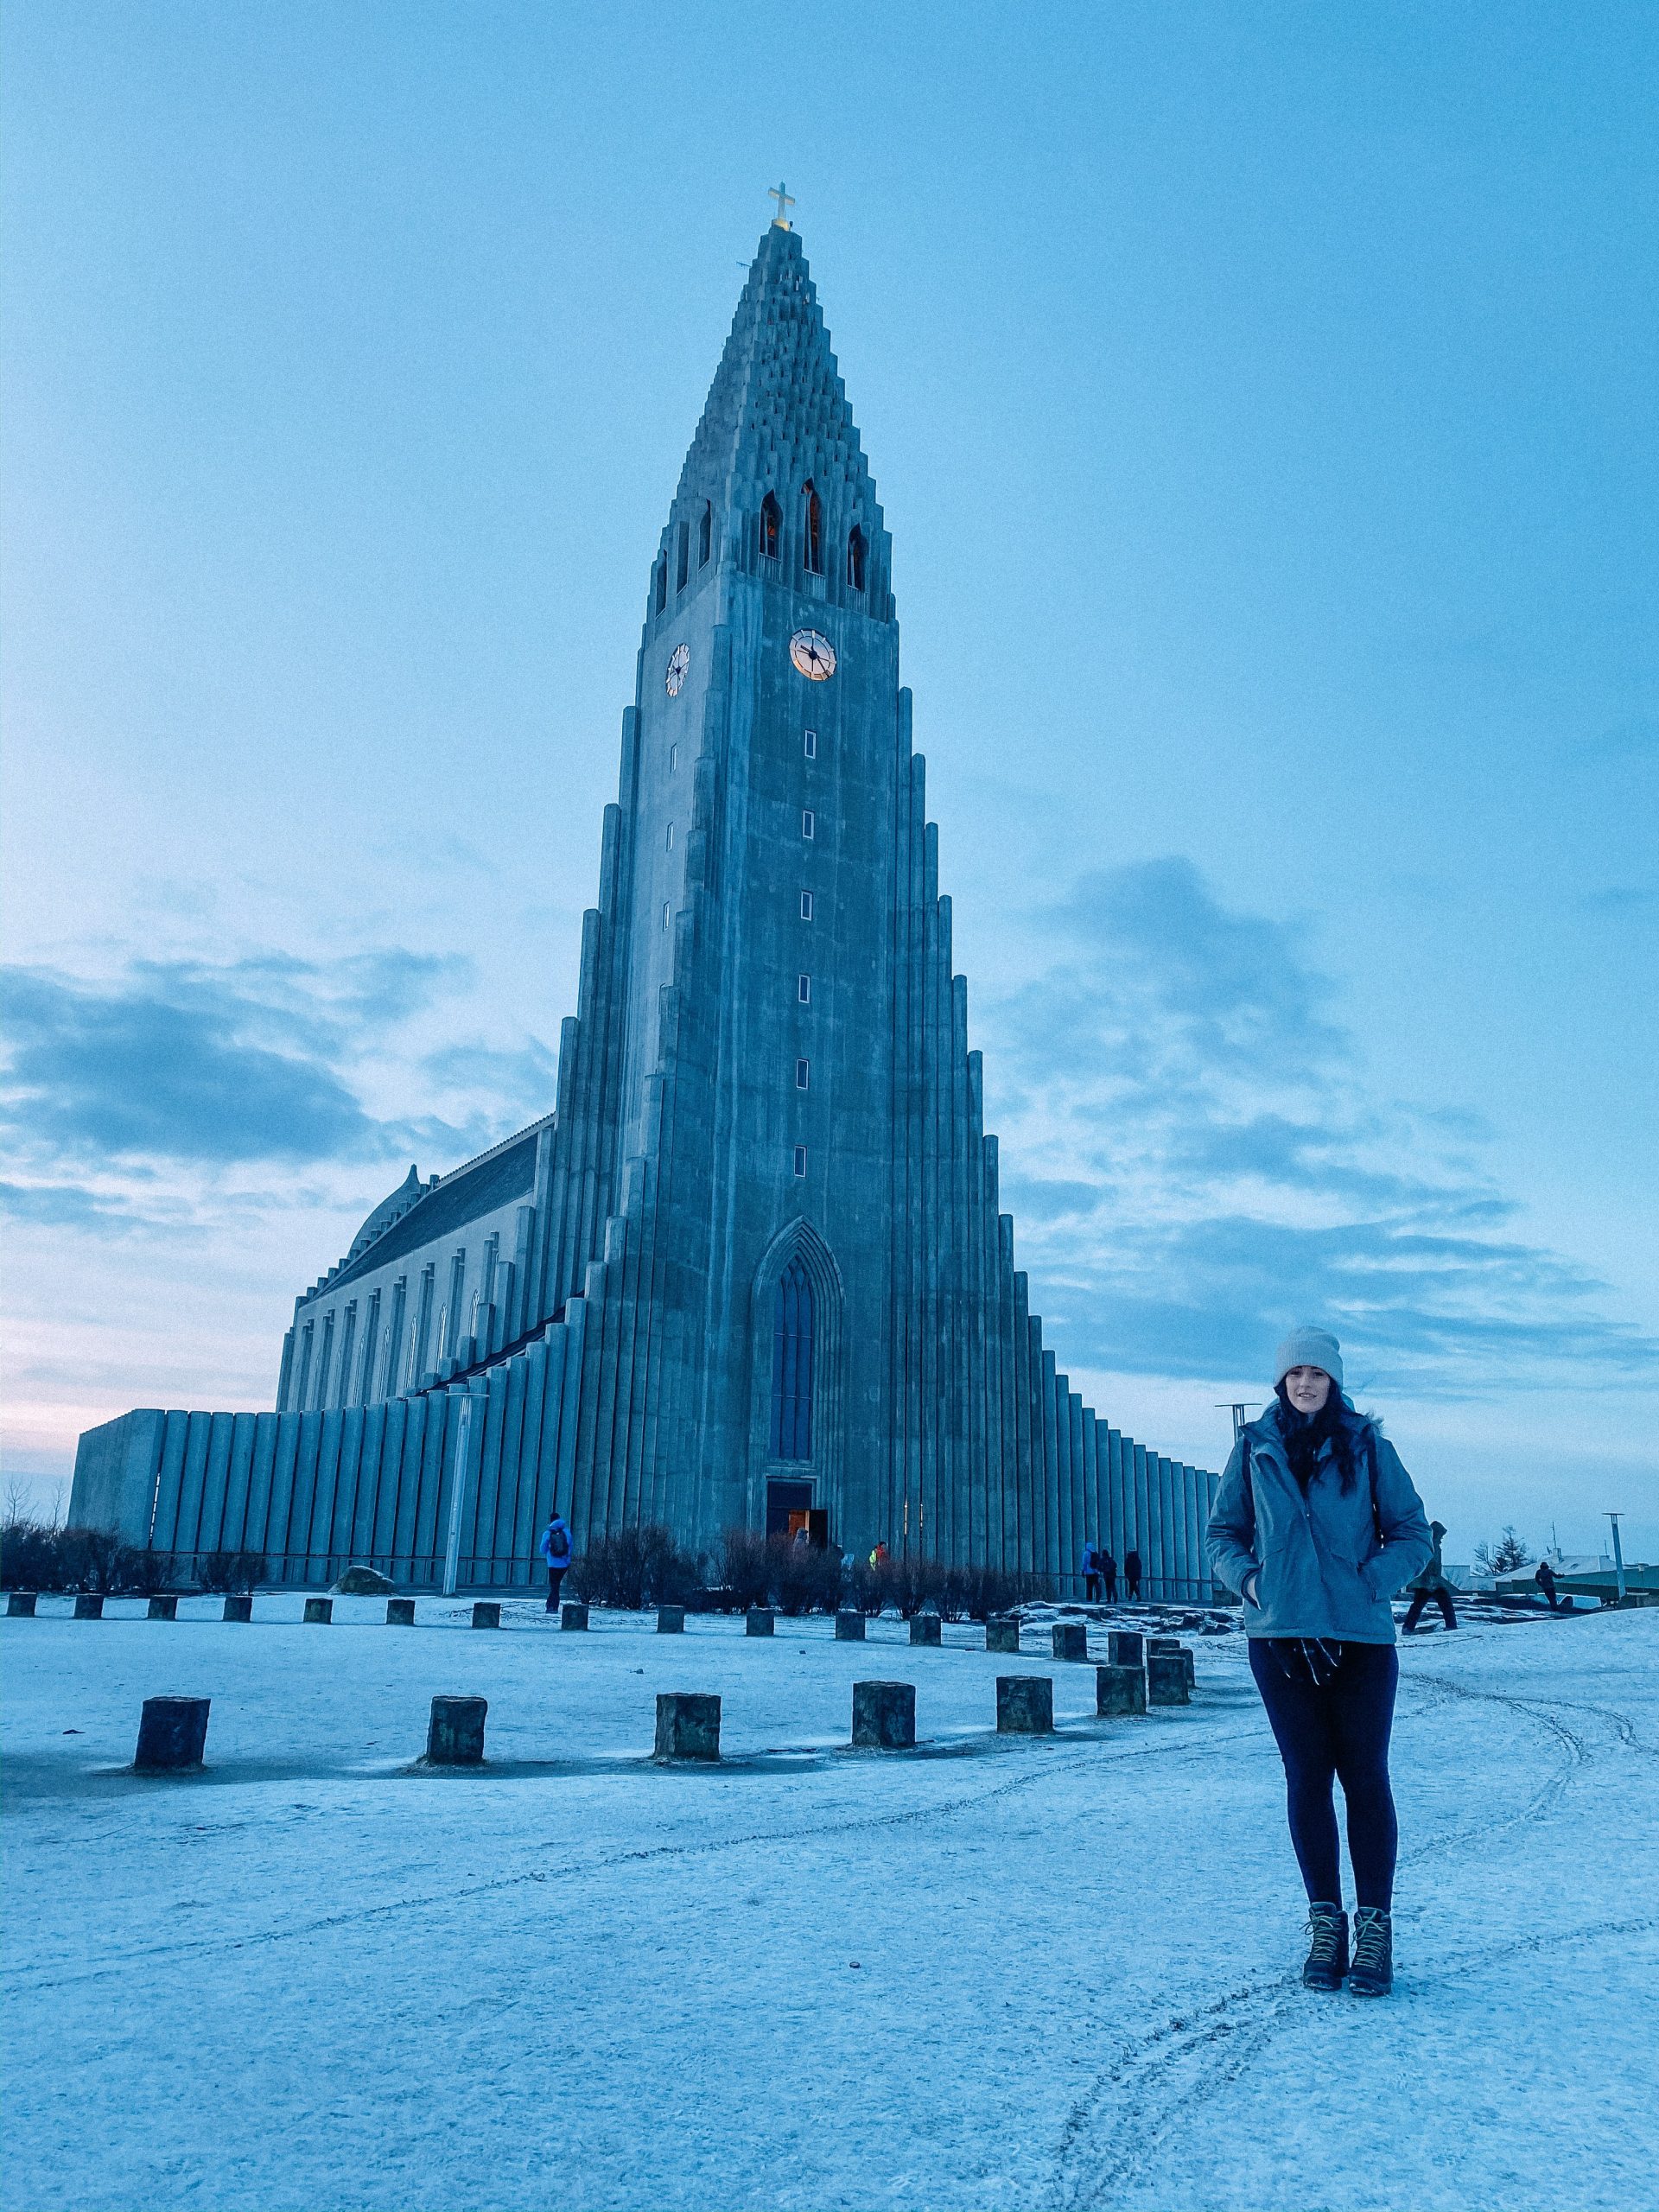 Hallgrimskirkja church in Iceland